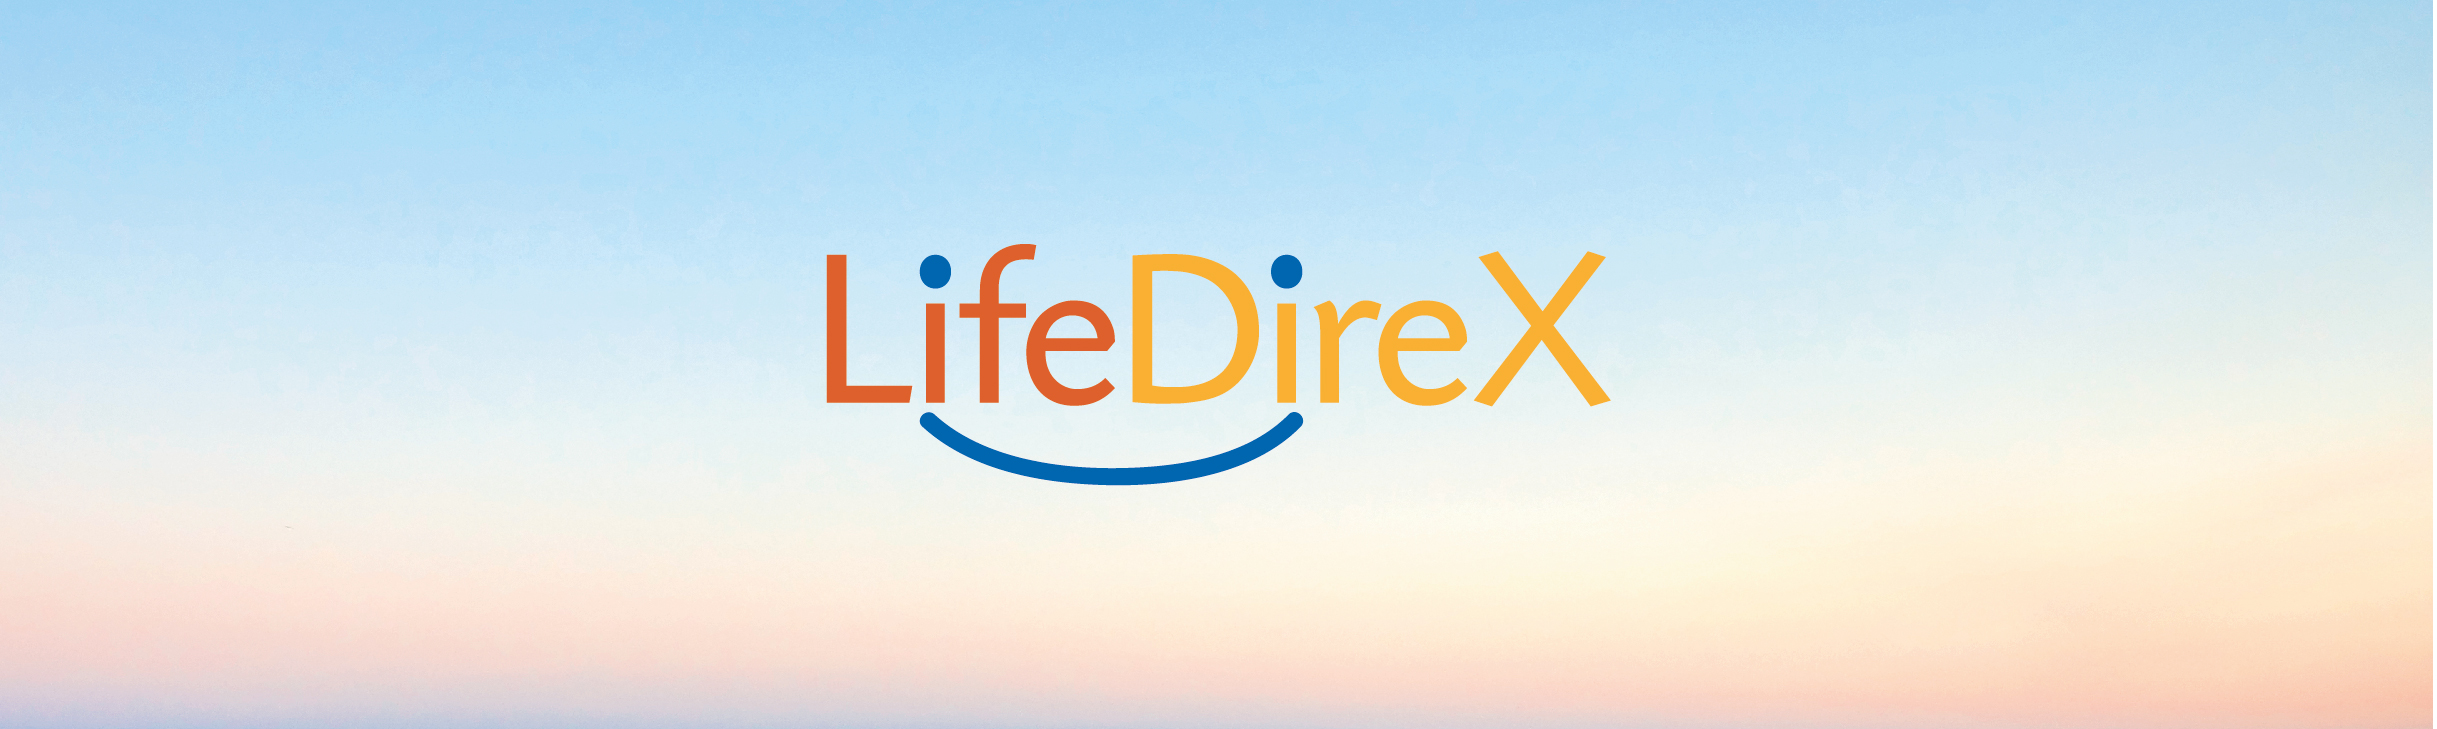 About lifedirex